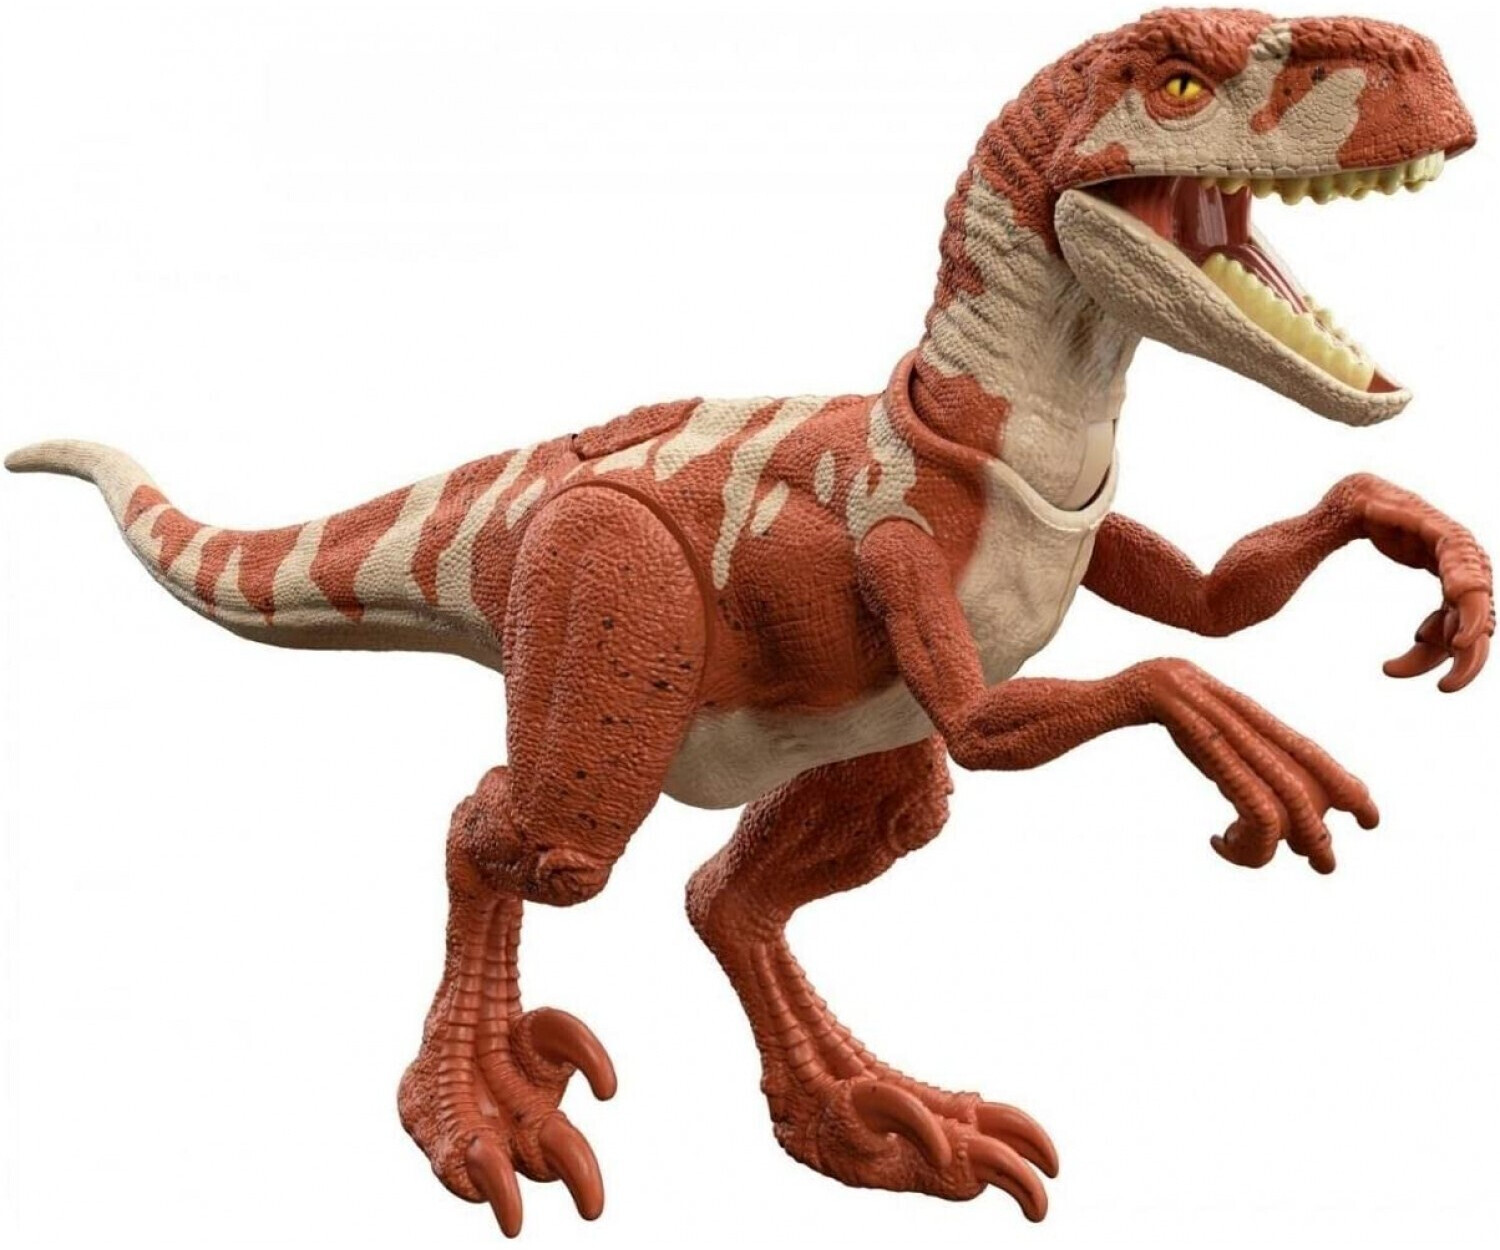 Mattel Jurassic World Dominion Ferocious Pack Atrociraptor Ab 1081 € Preisvergleich Bei 